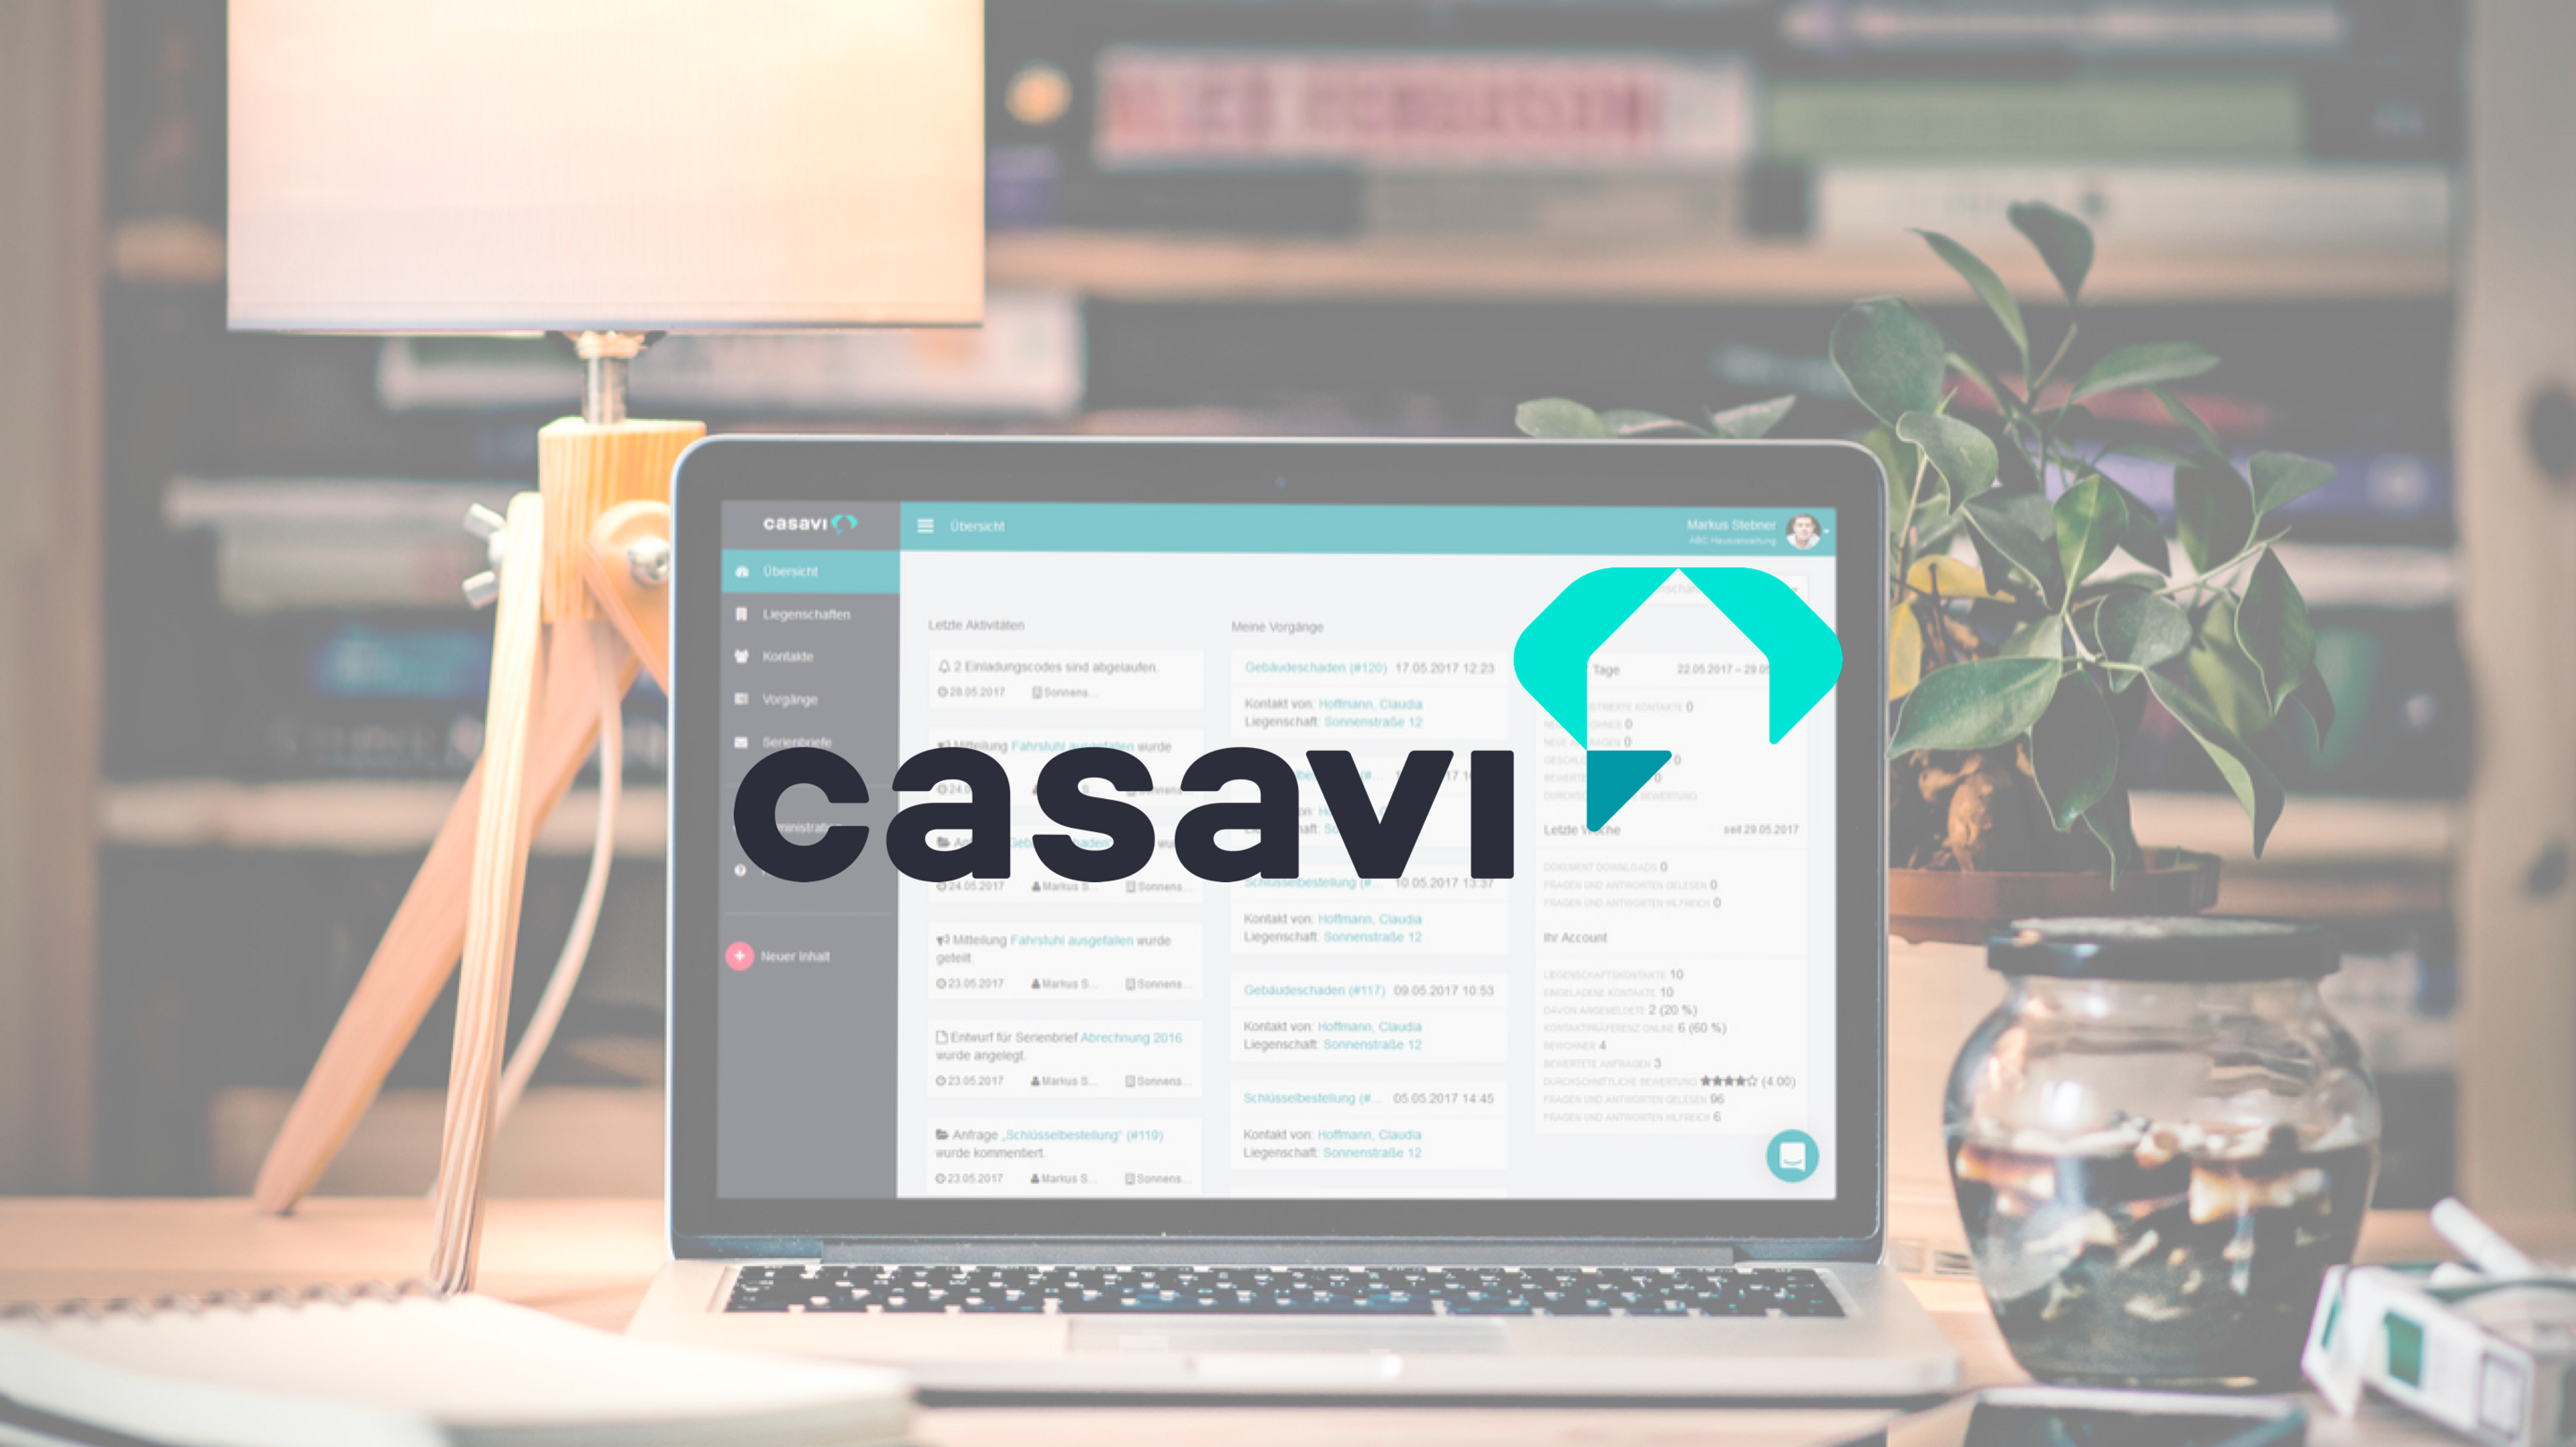 Case Study zu casavi: Erfahrungsbericht des PropTech-Unternehmens